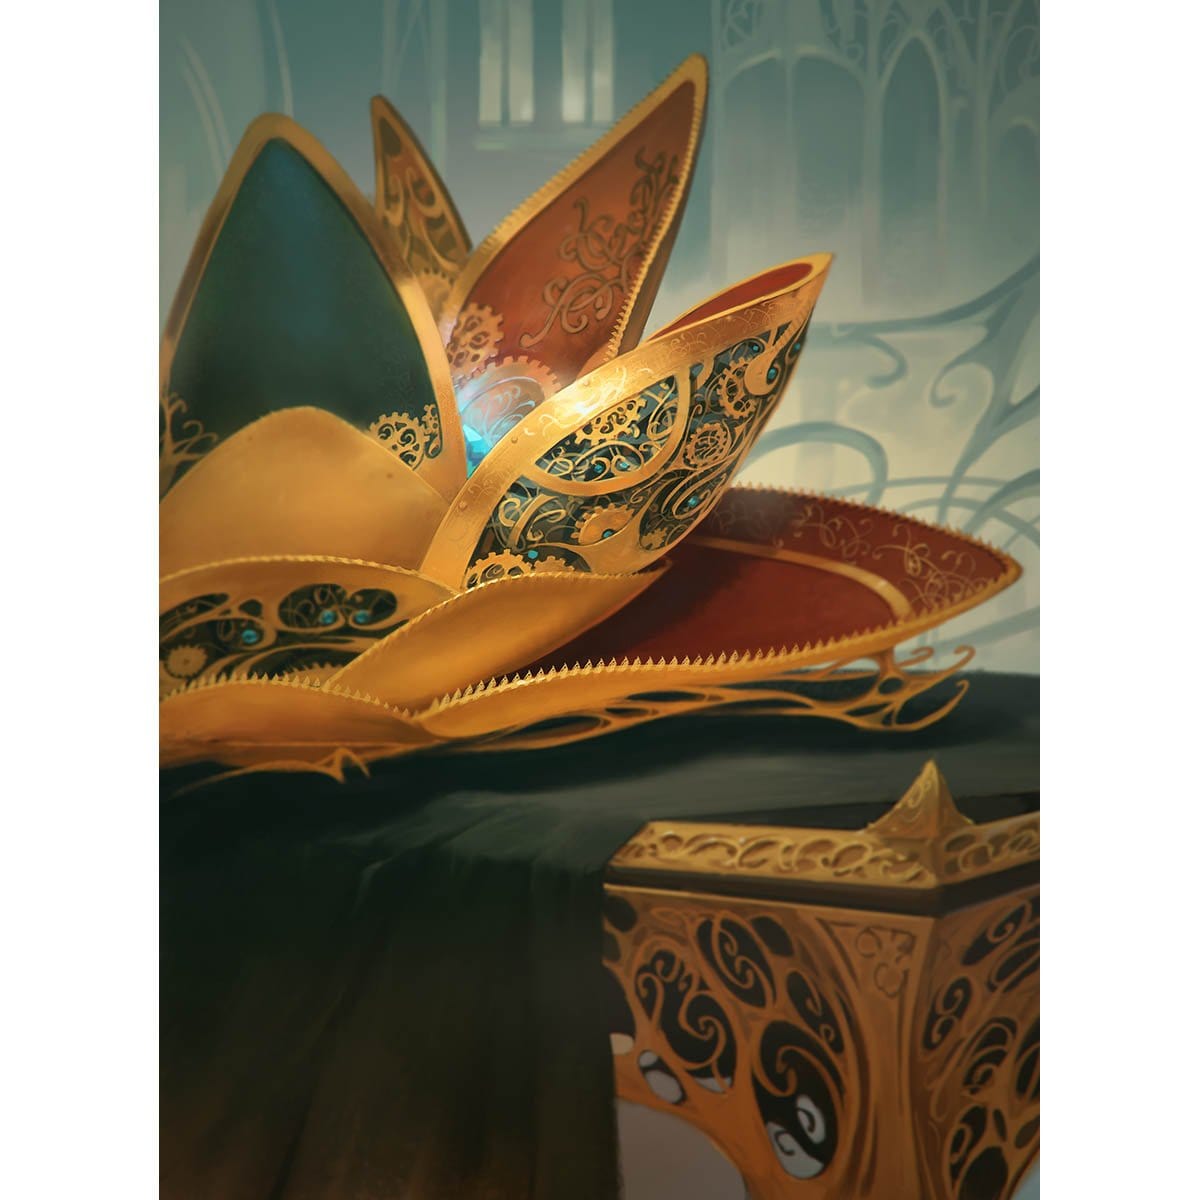 Lotus Petal Print - Print - Original Magic Art - Accessories for Magic the Gathering and other card games